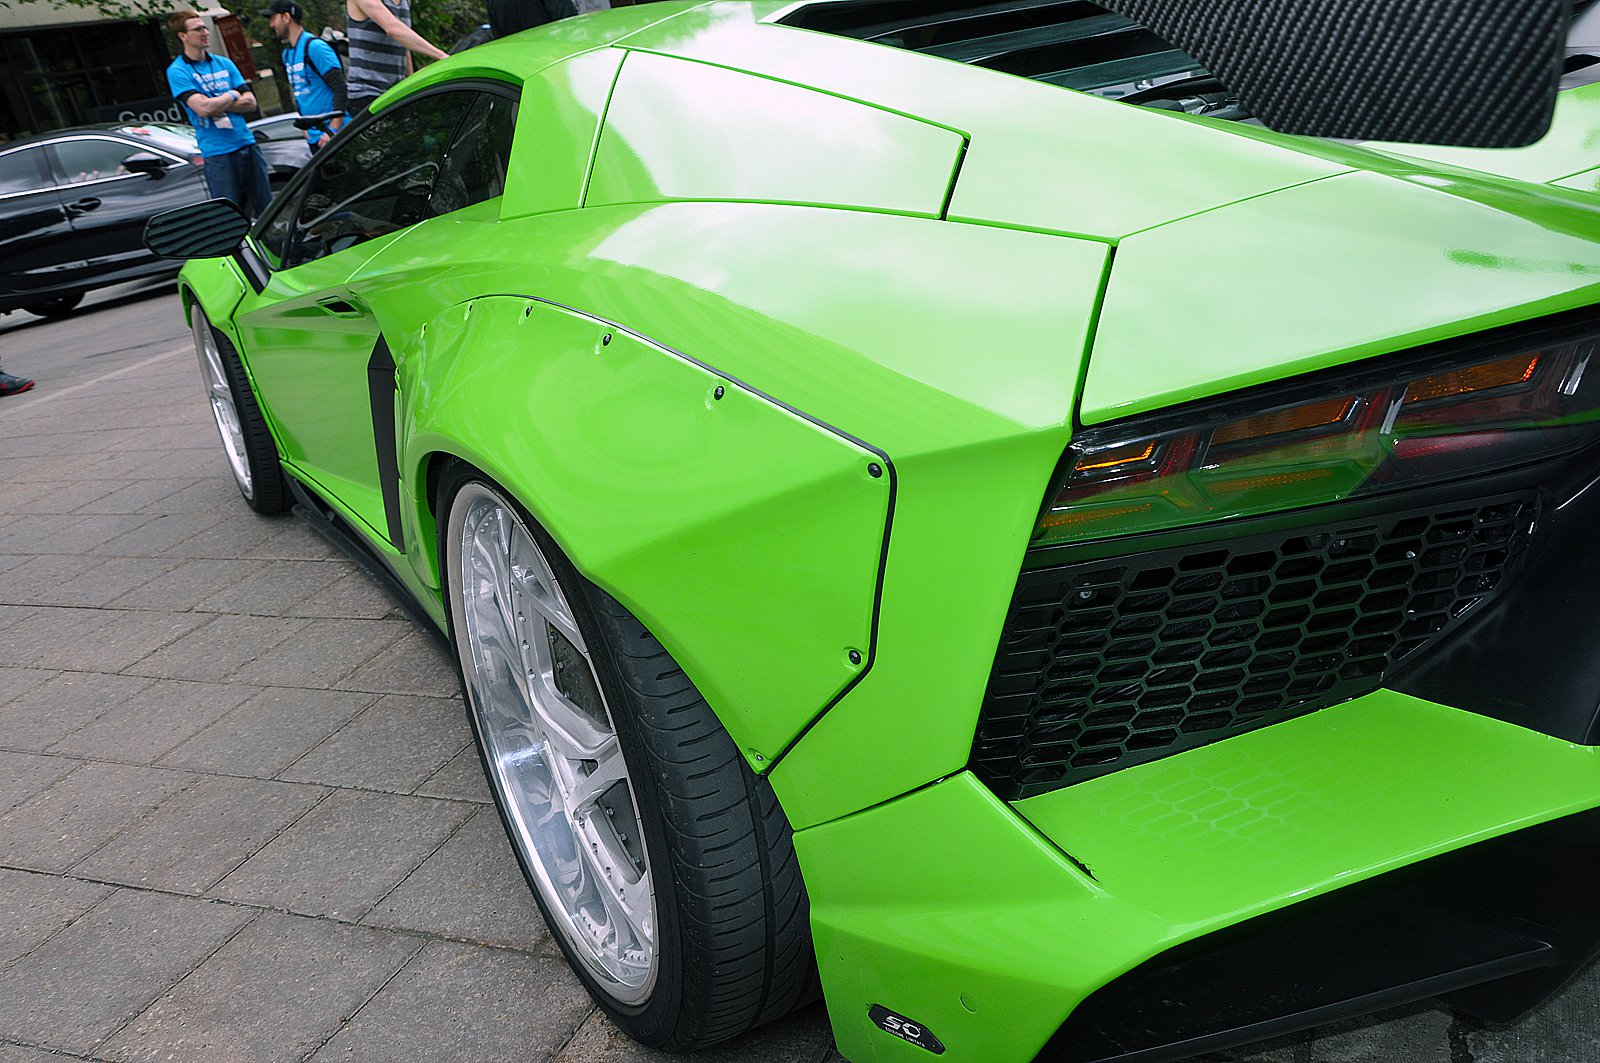 Liberty Walk Lamborghini Aventador был замечен в центре Эдмонтона